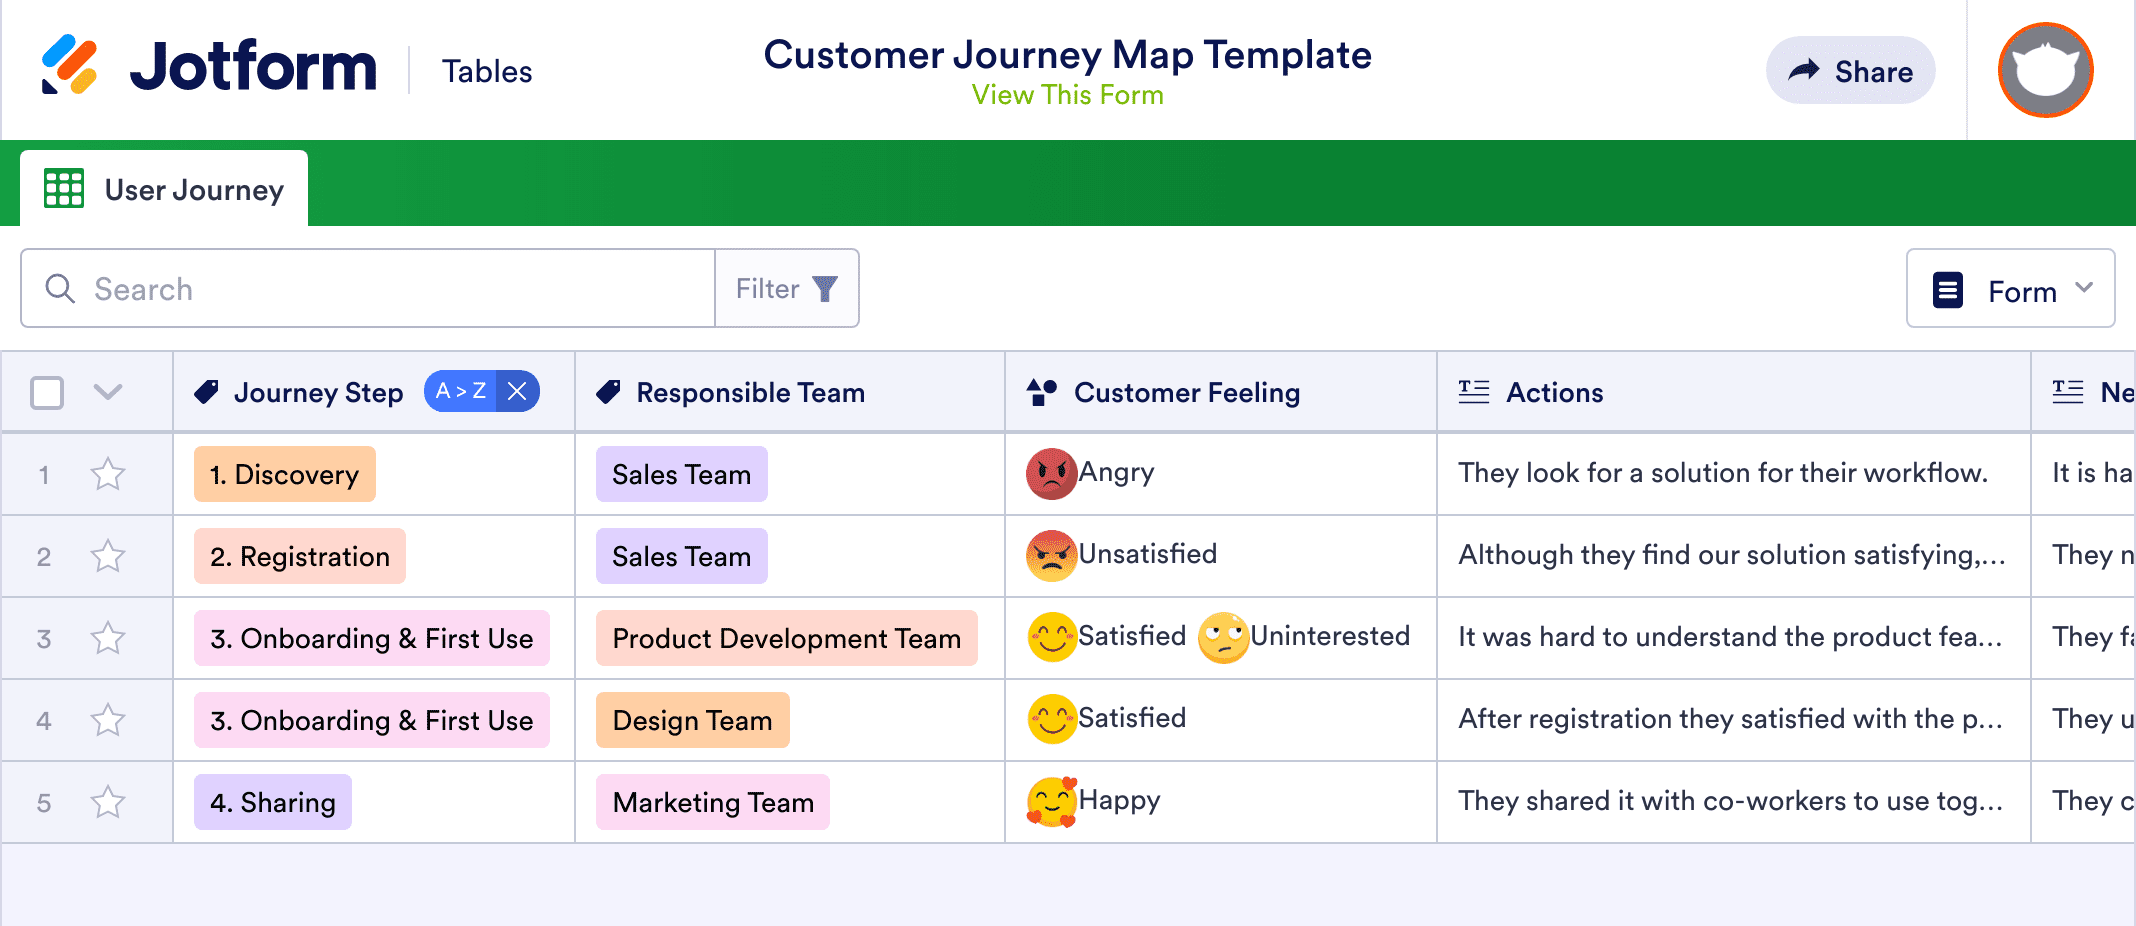 Customer Journey Map Template | Jotform Tables